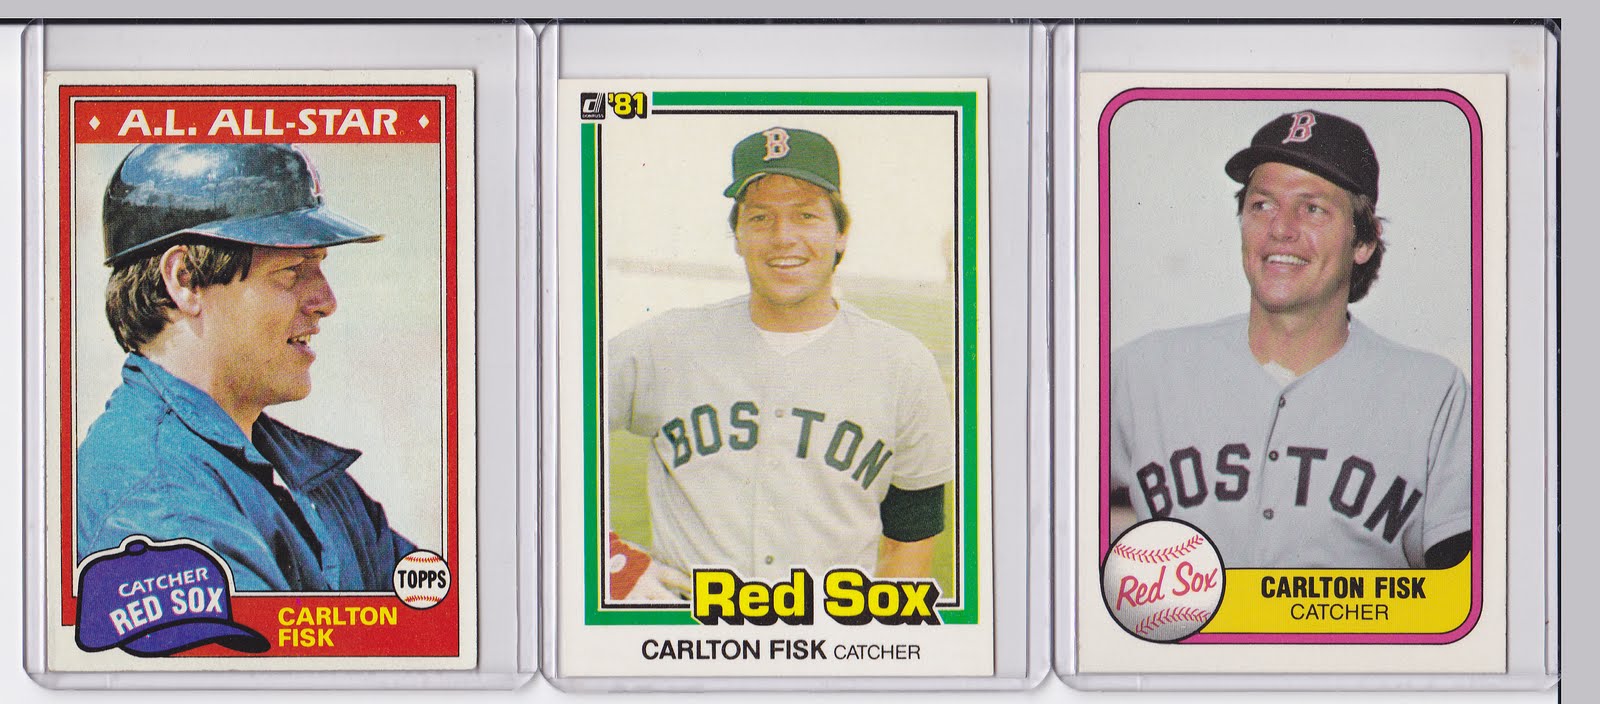 Red Sox Baseball Cards: 1981 Carlton Fisk Cards